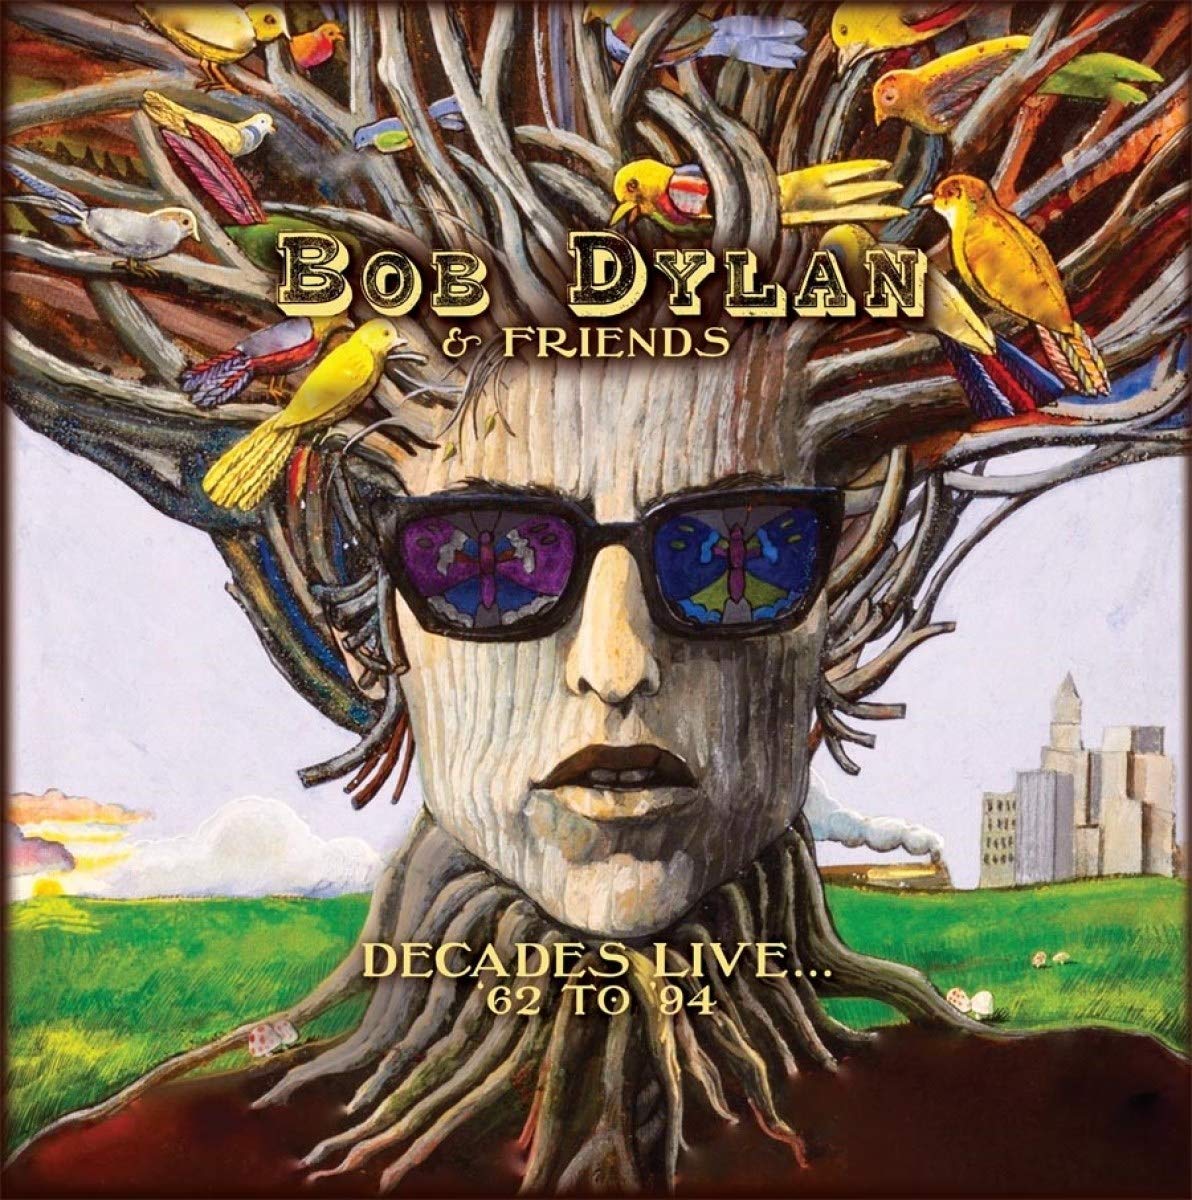 Decades Live 62 94 Lp Bob Dylan ボブ ディラン Old Rock ディスクユニオン オンラインショップ Diskunion Net